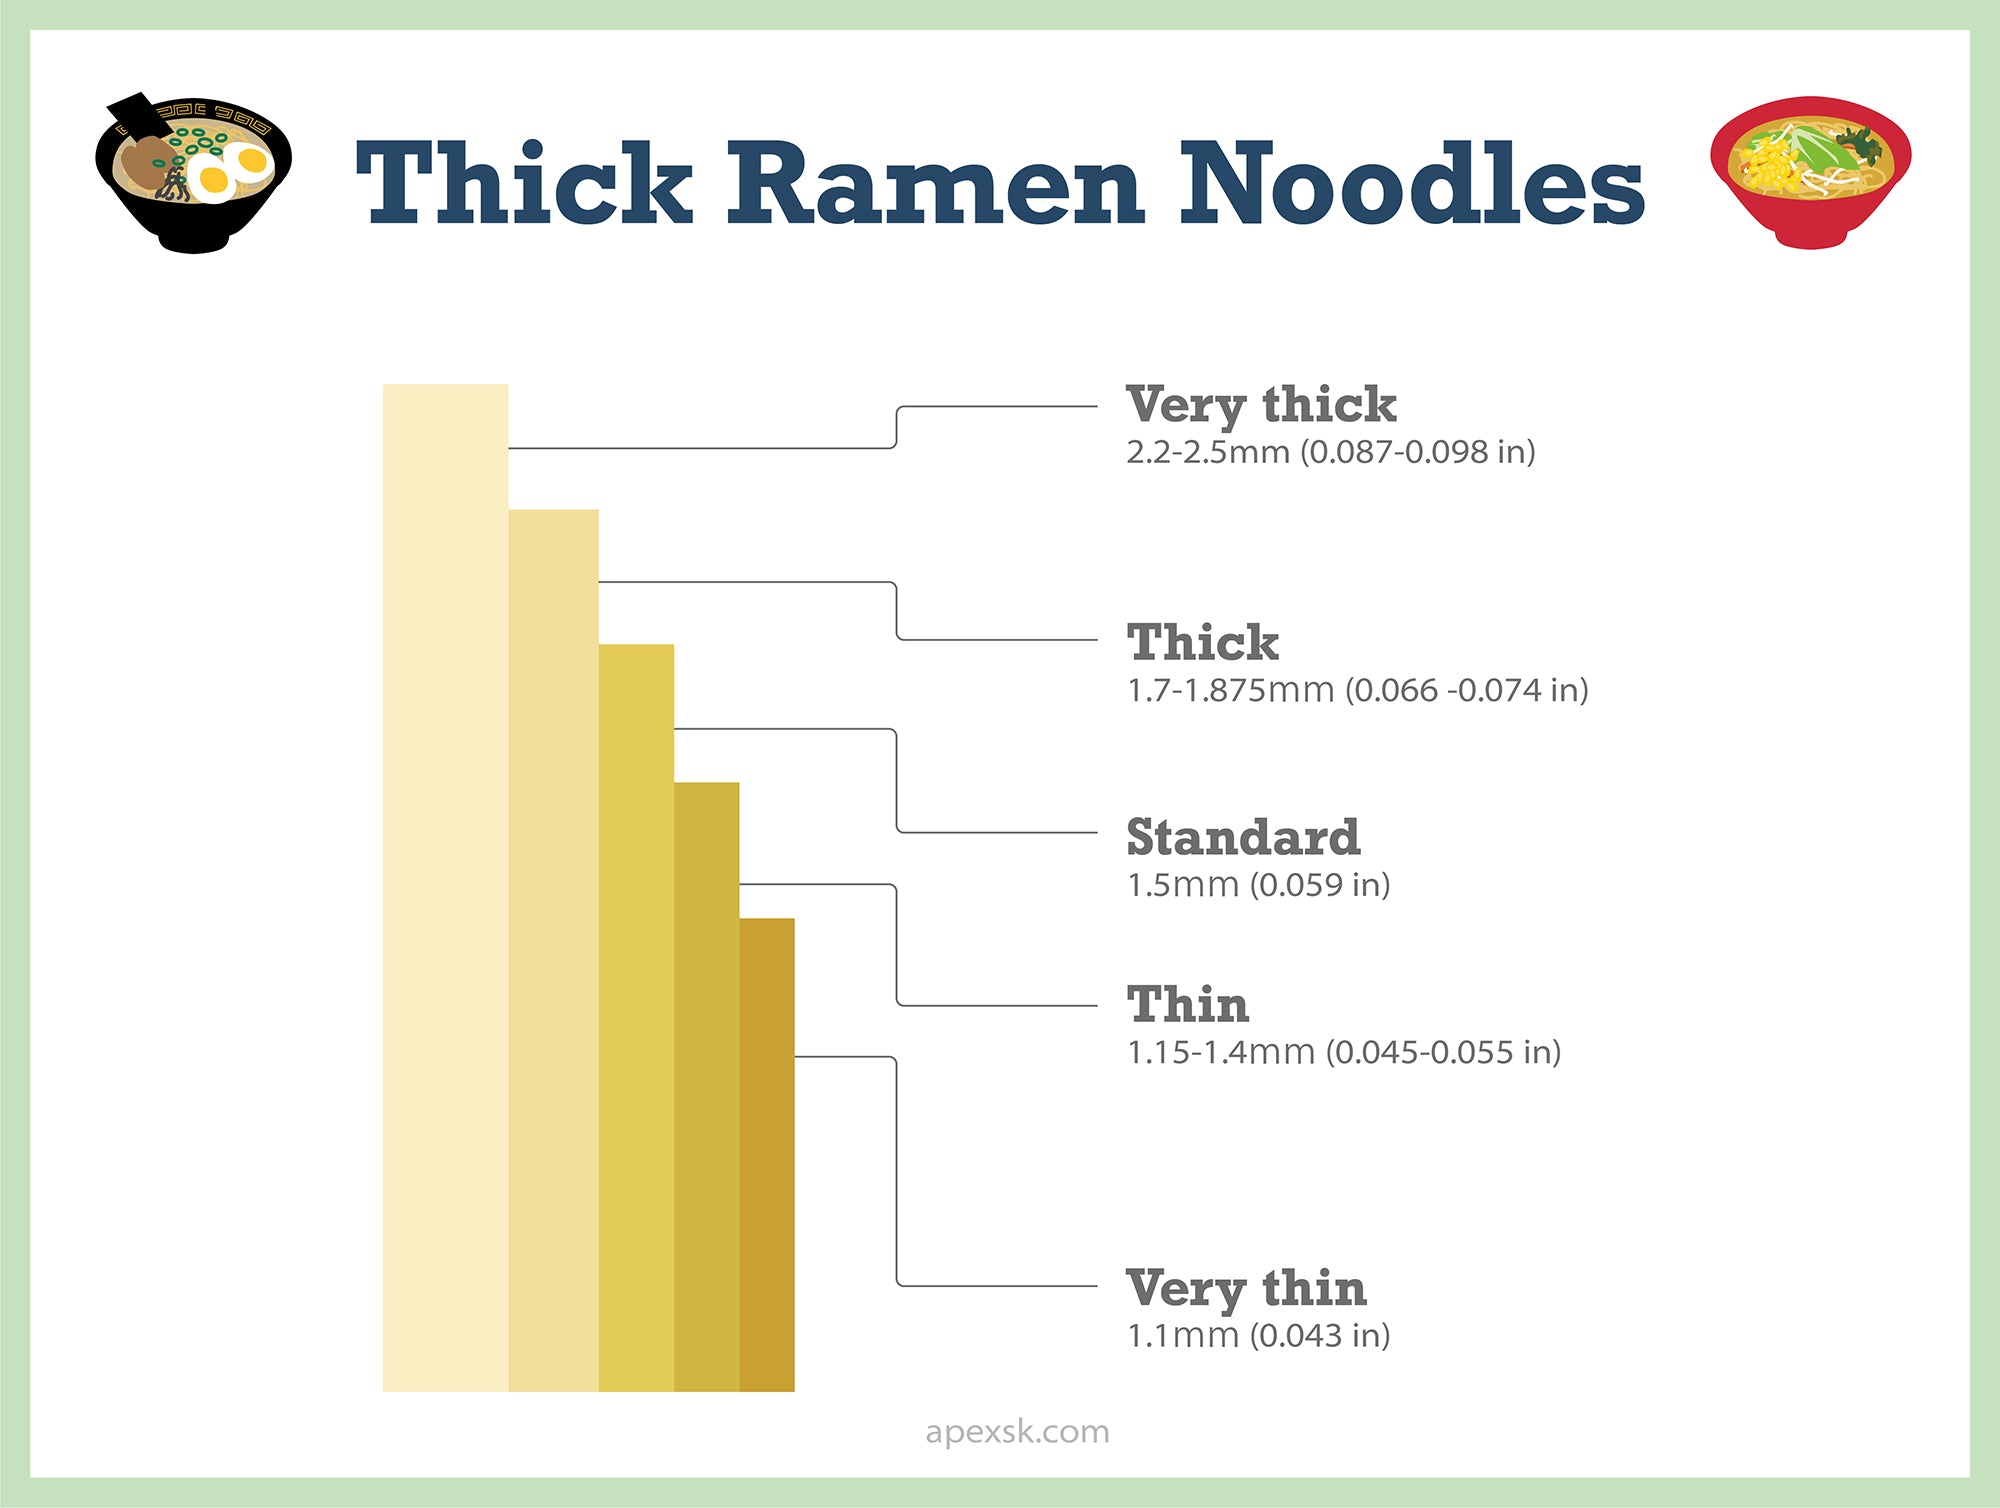 Thick Ramen Noodles: Feeling Like Getting Thick Ramen?